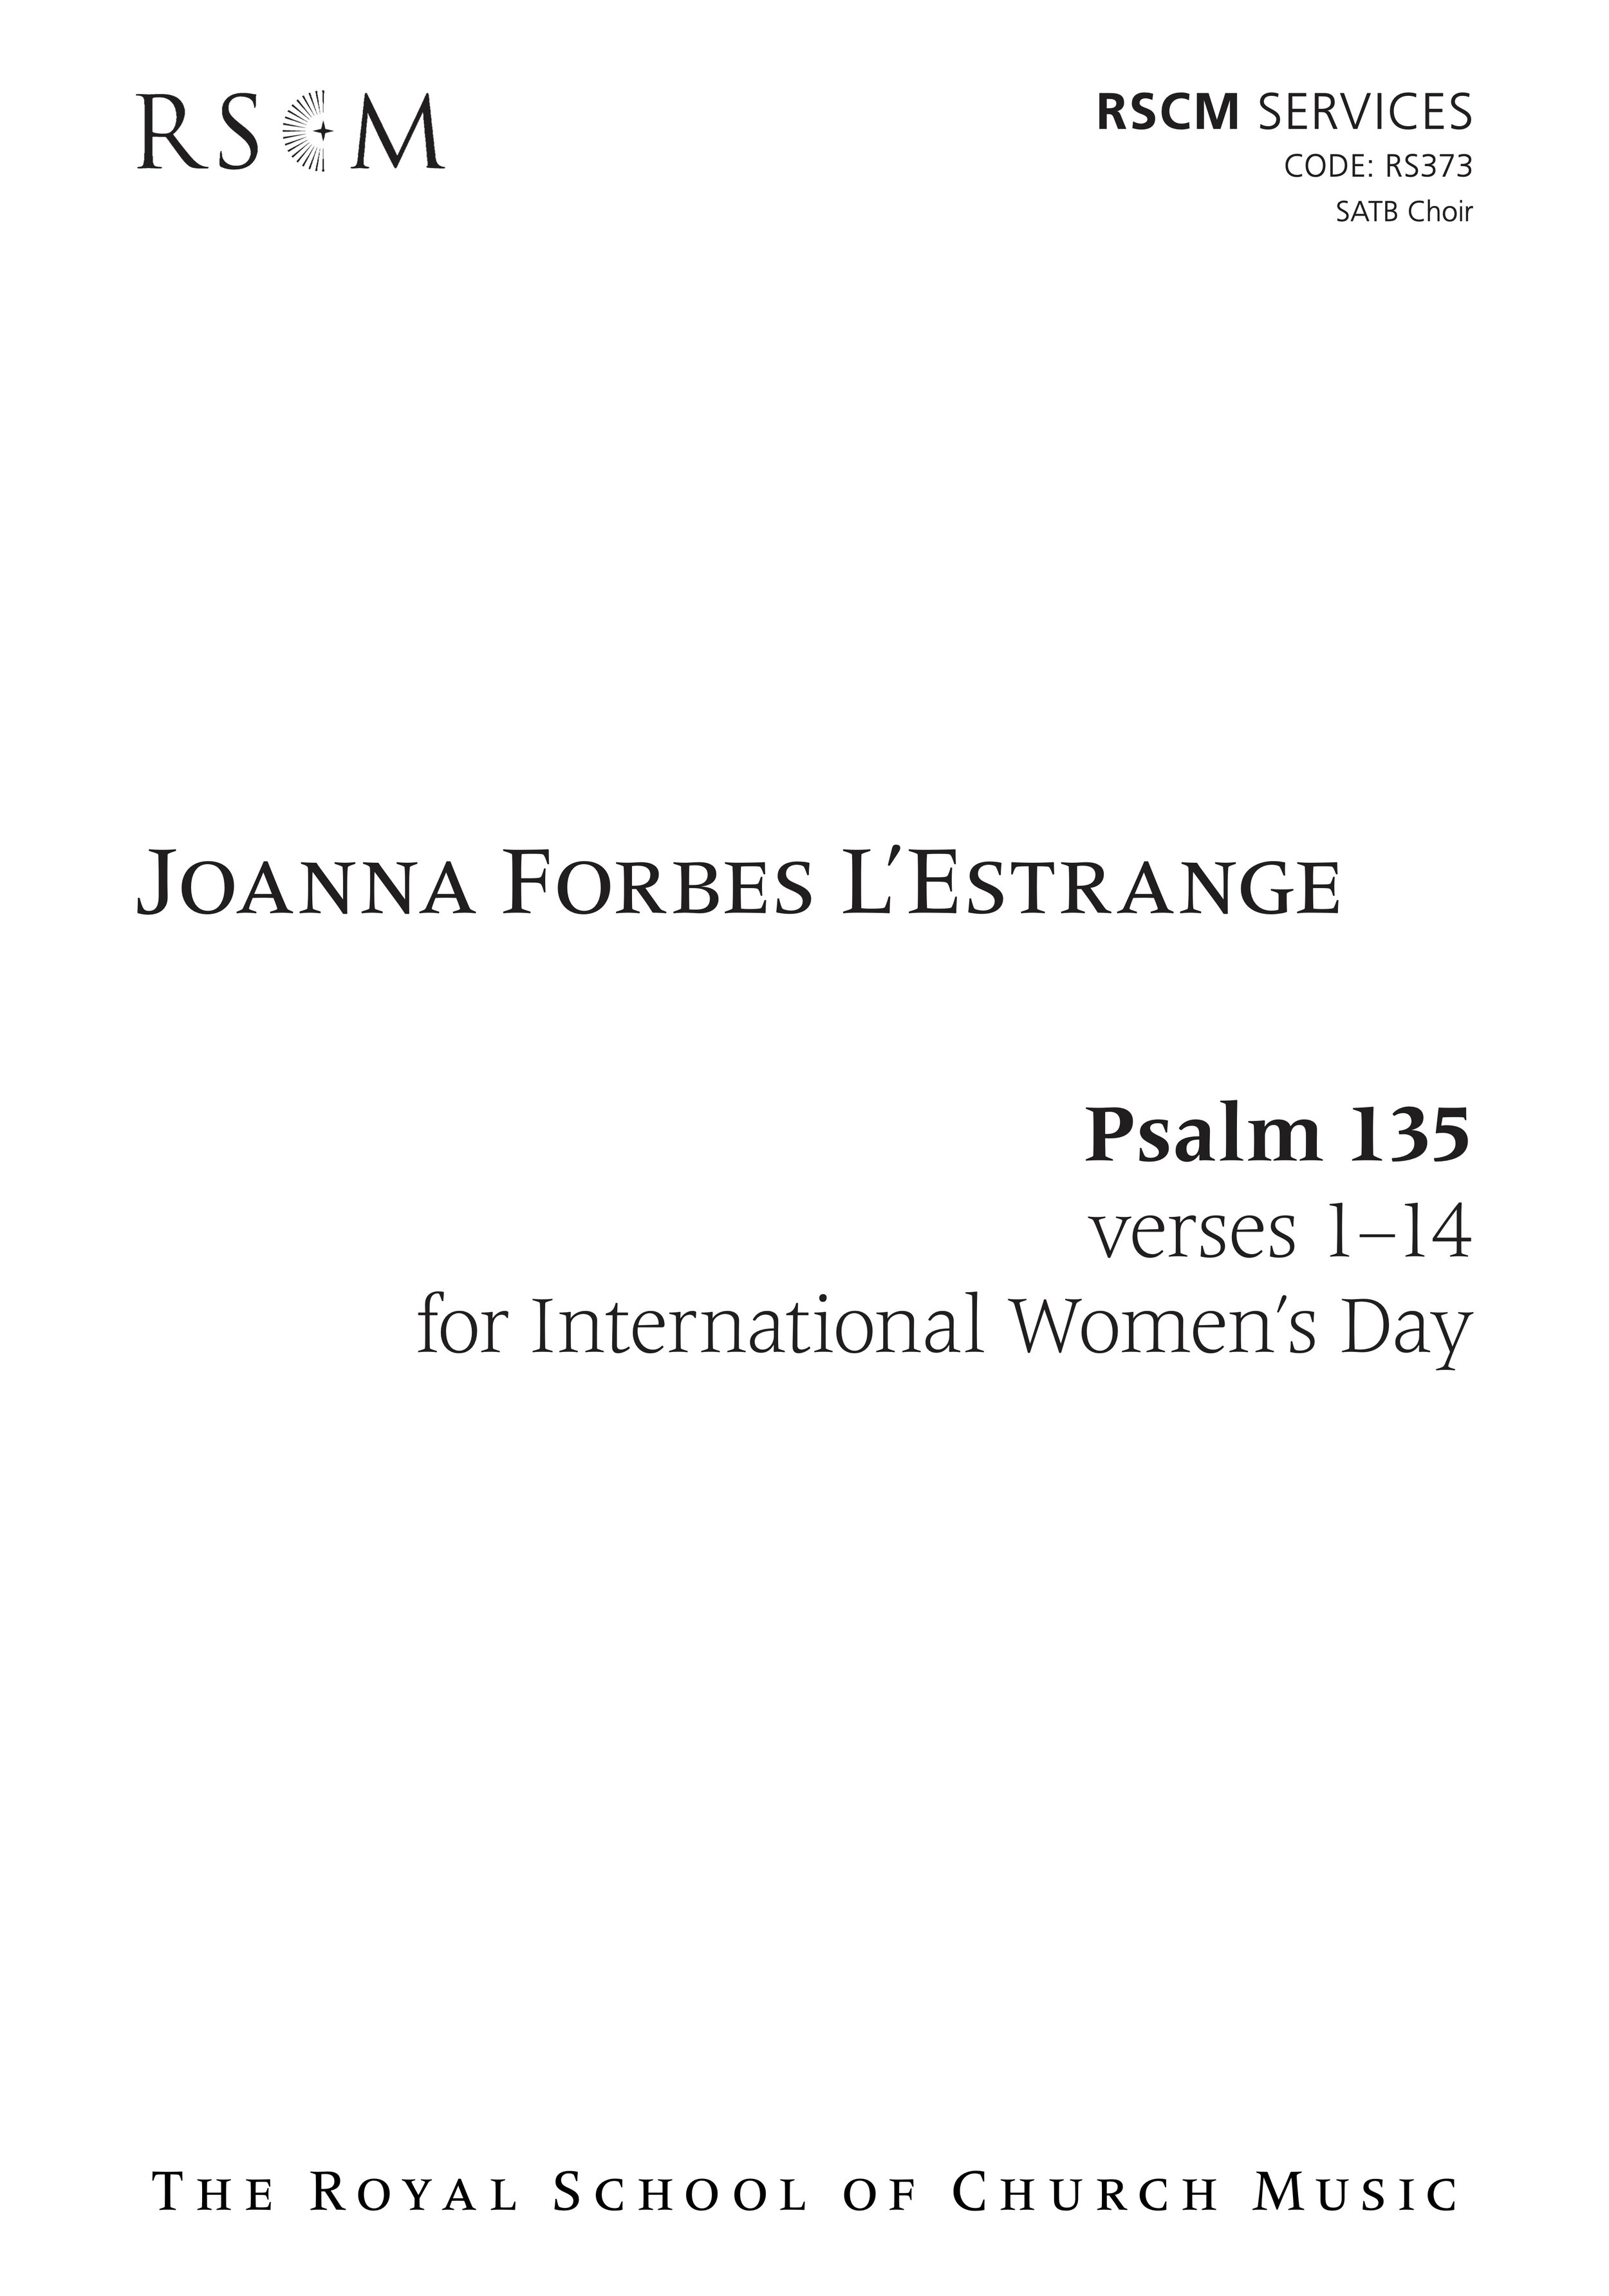 Psalm 135 Joanna Forbes L'Estrange.jpg